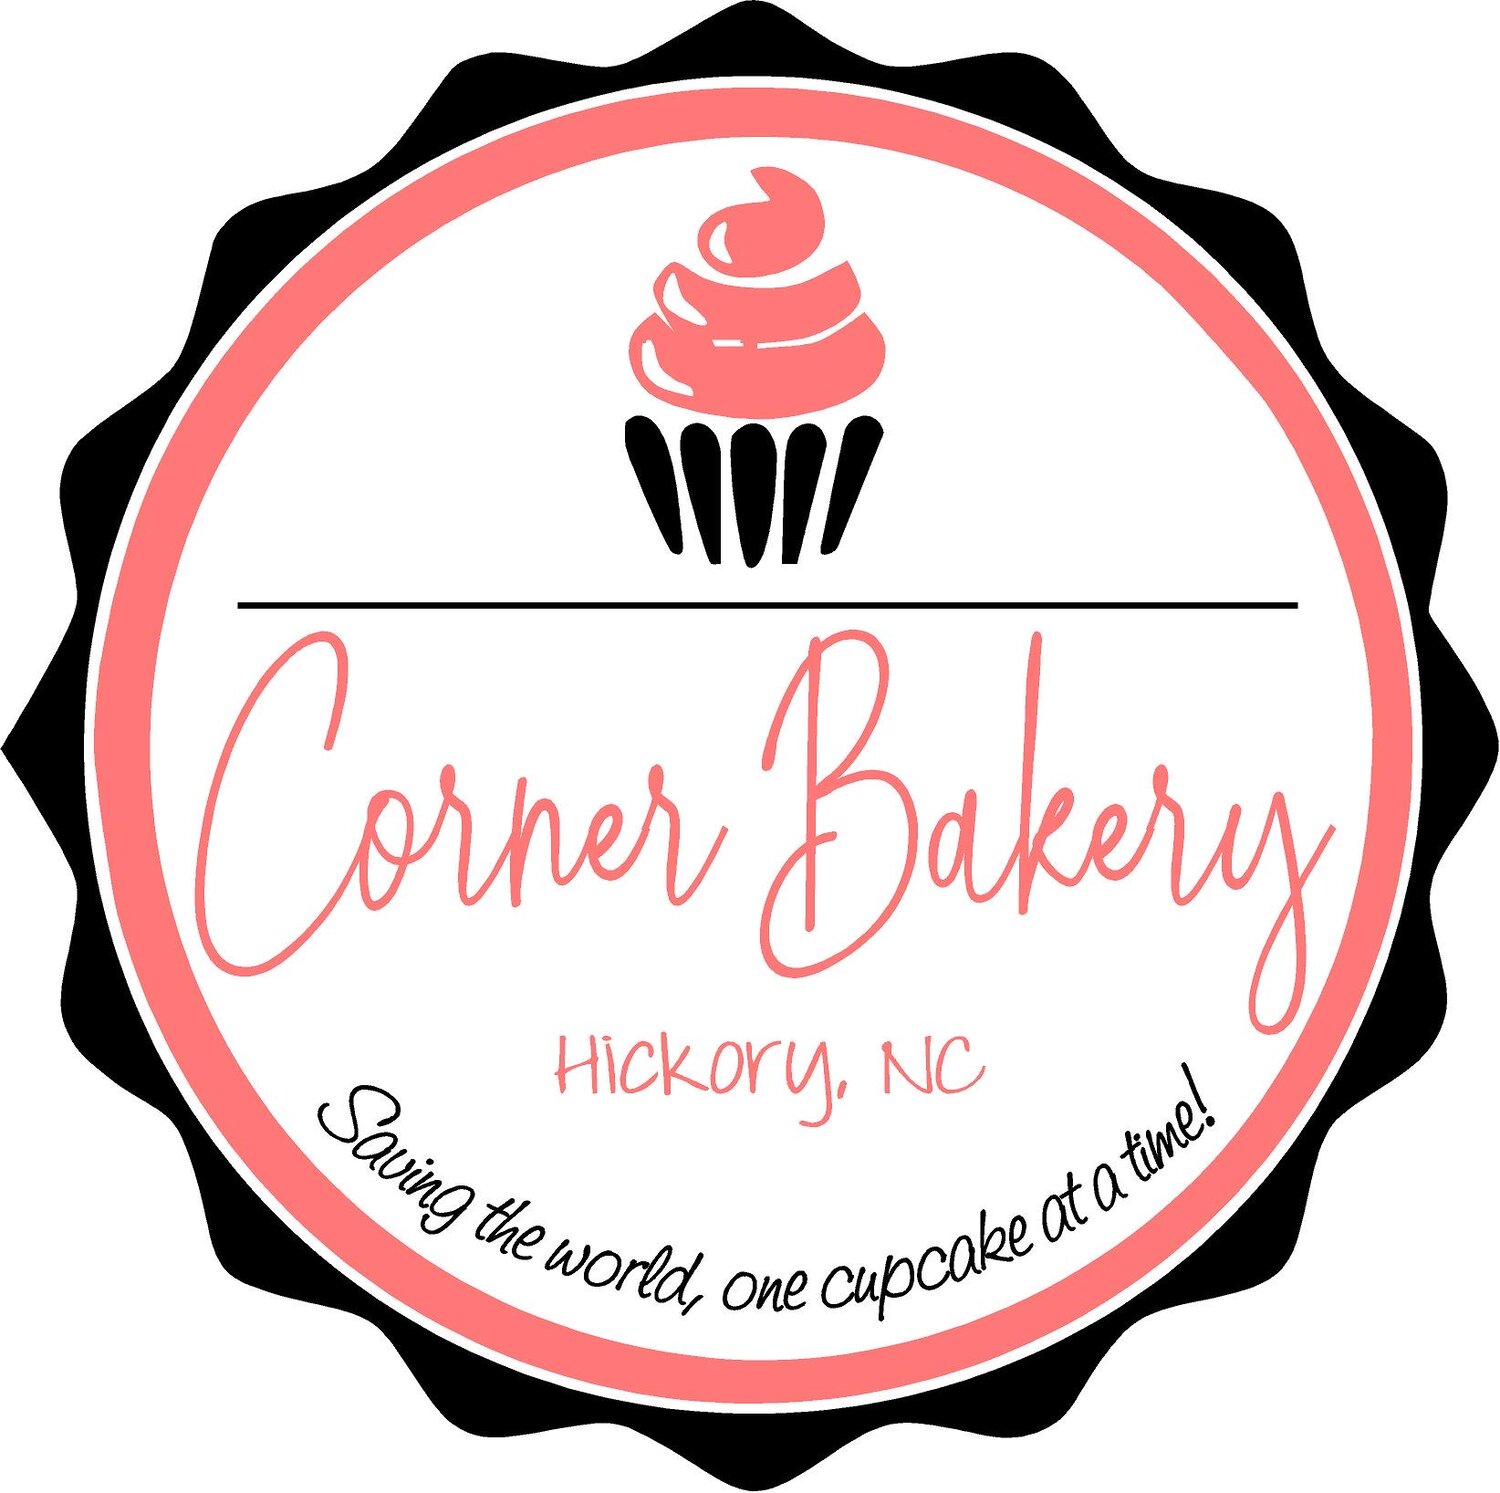 Corner Bakery Hickory